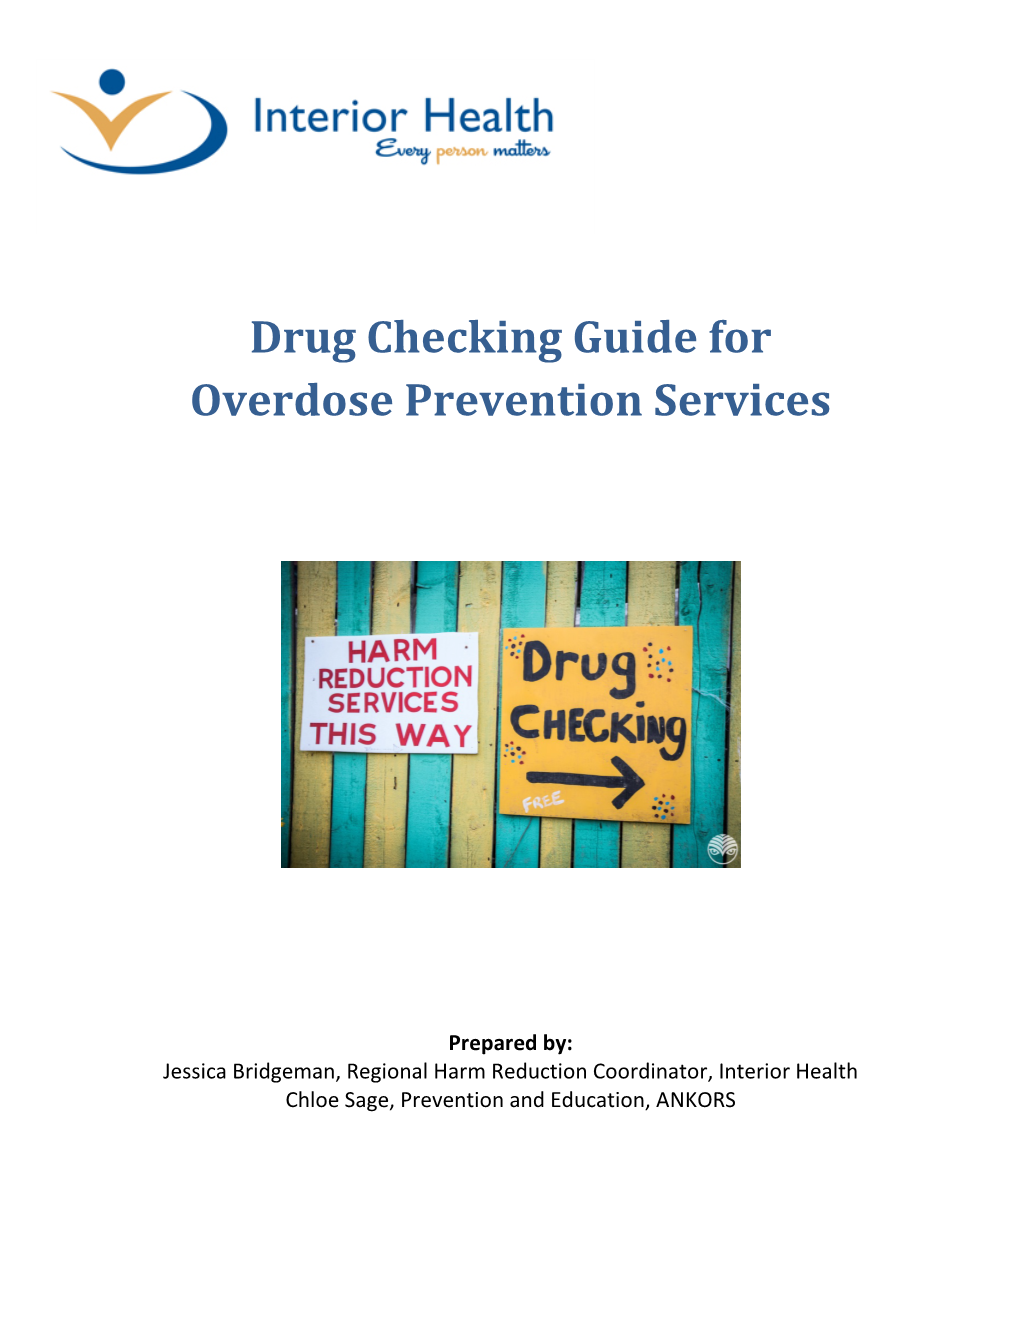 Drug Checking Guide for Overdose Prevention Services